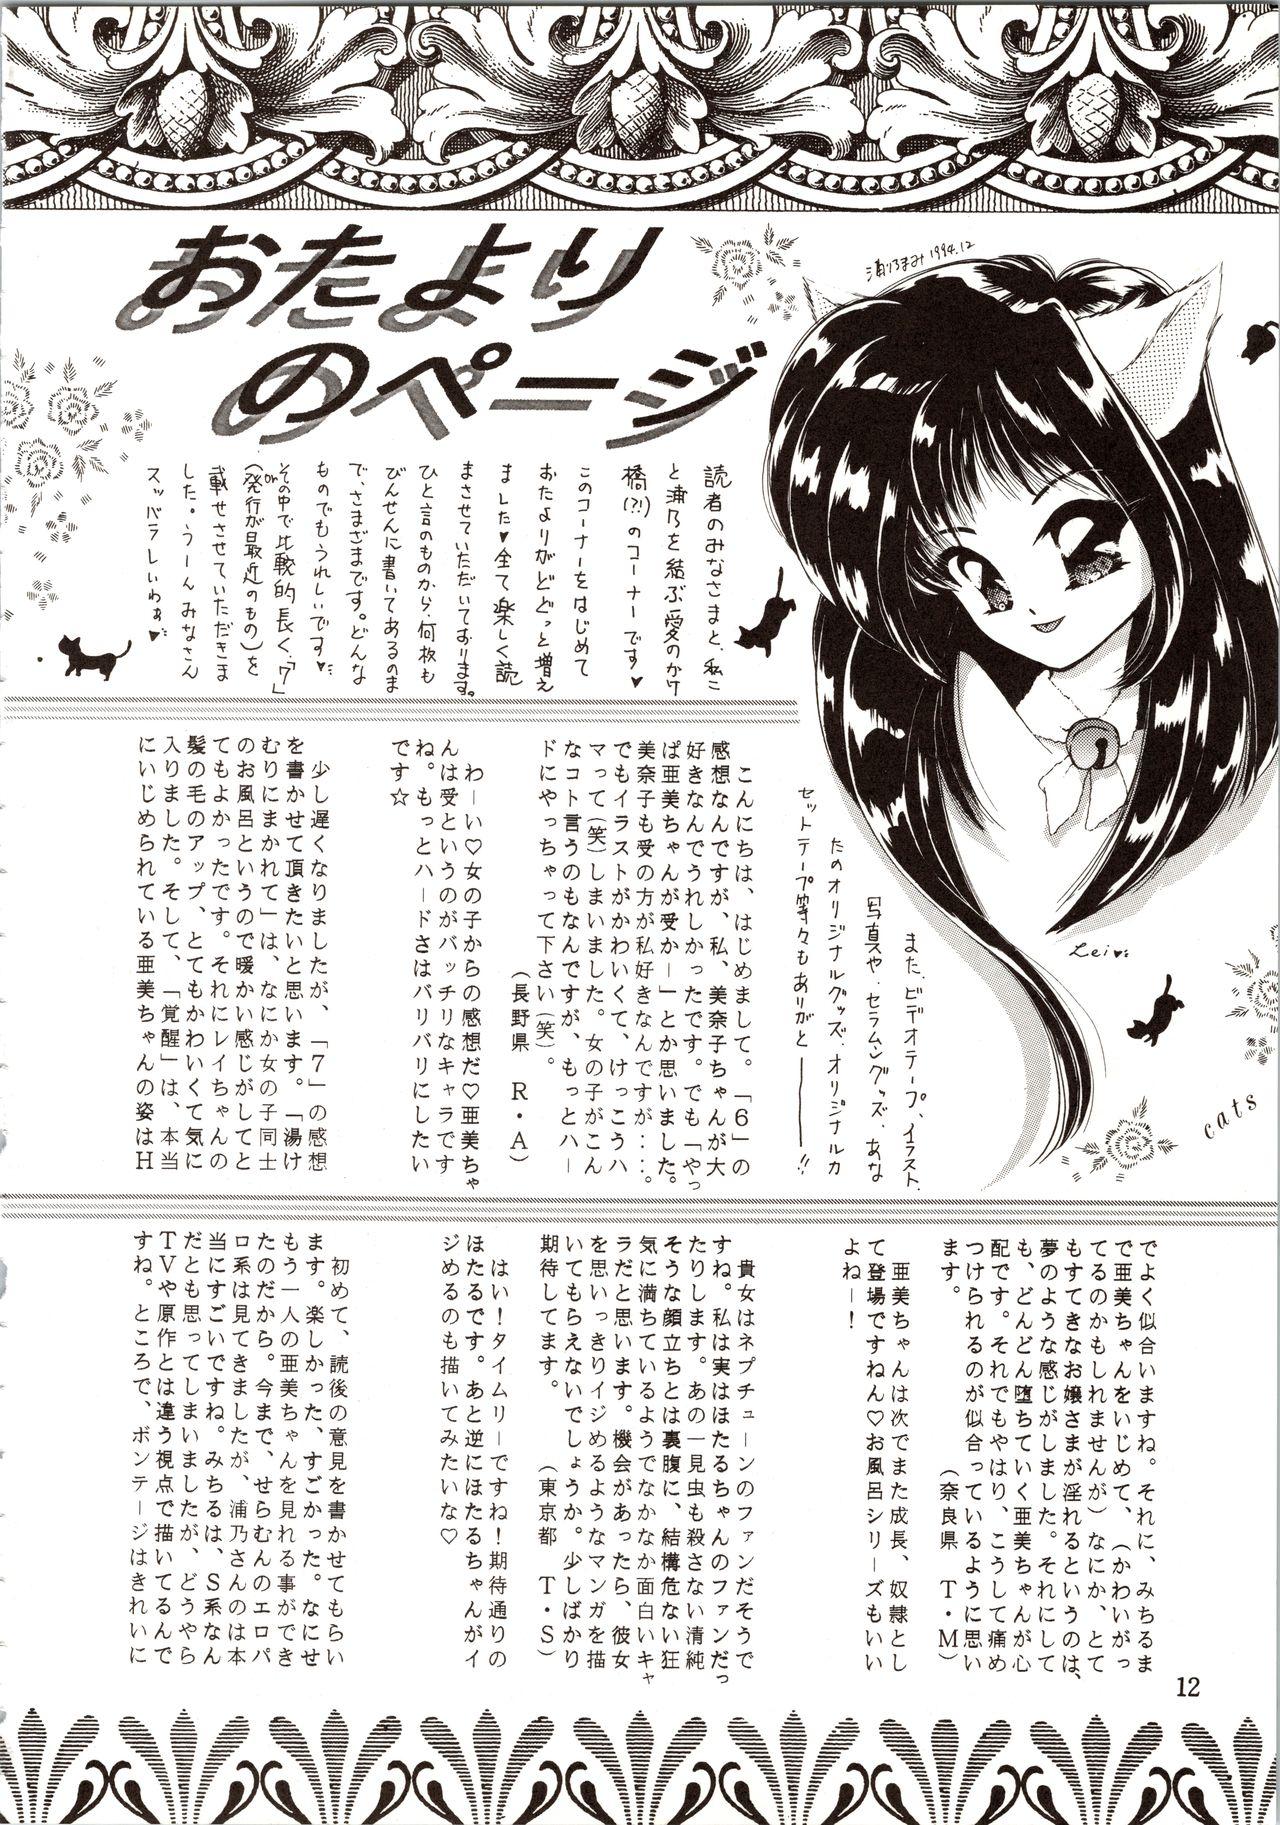 Jerk Off Instruction Tsukiyo no Tawamure 8 - Sailor moon Dick - Page 12